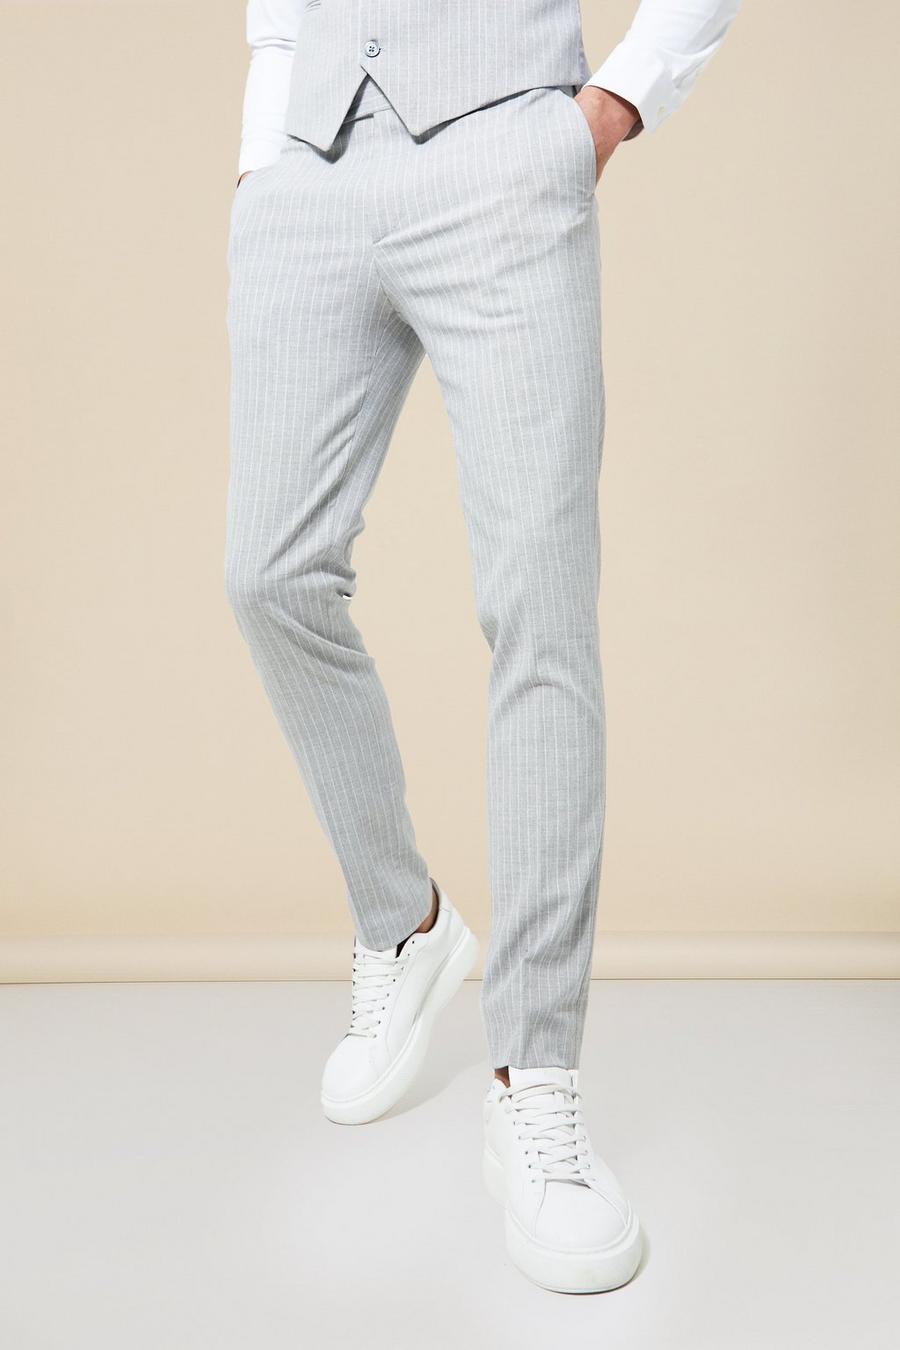 Pantaloni completo Skinny Fit a righe verticali, Light grey grigio